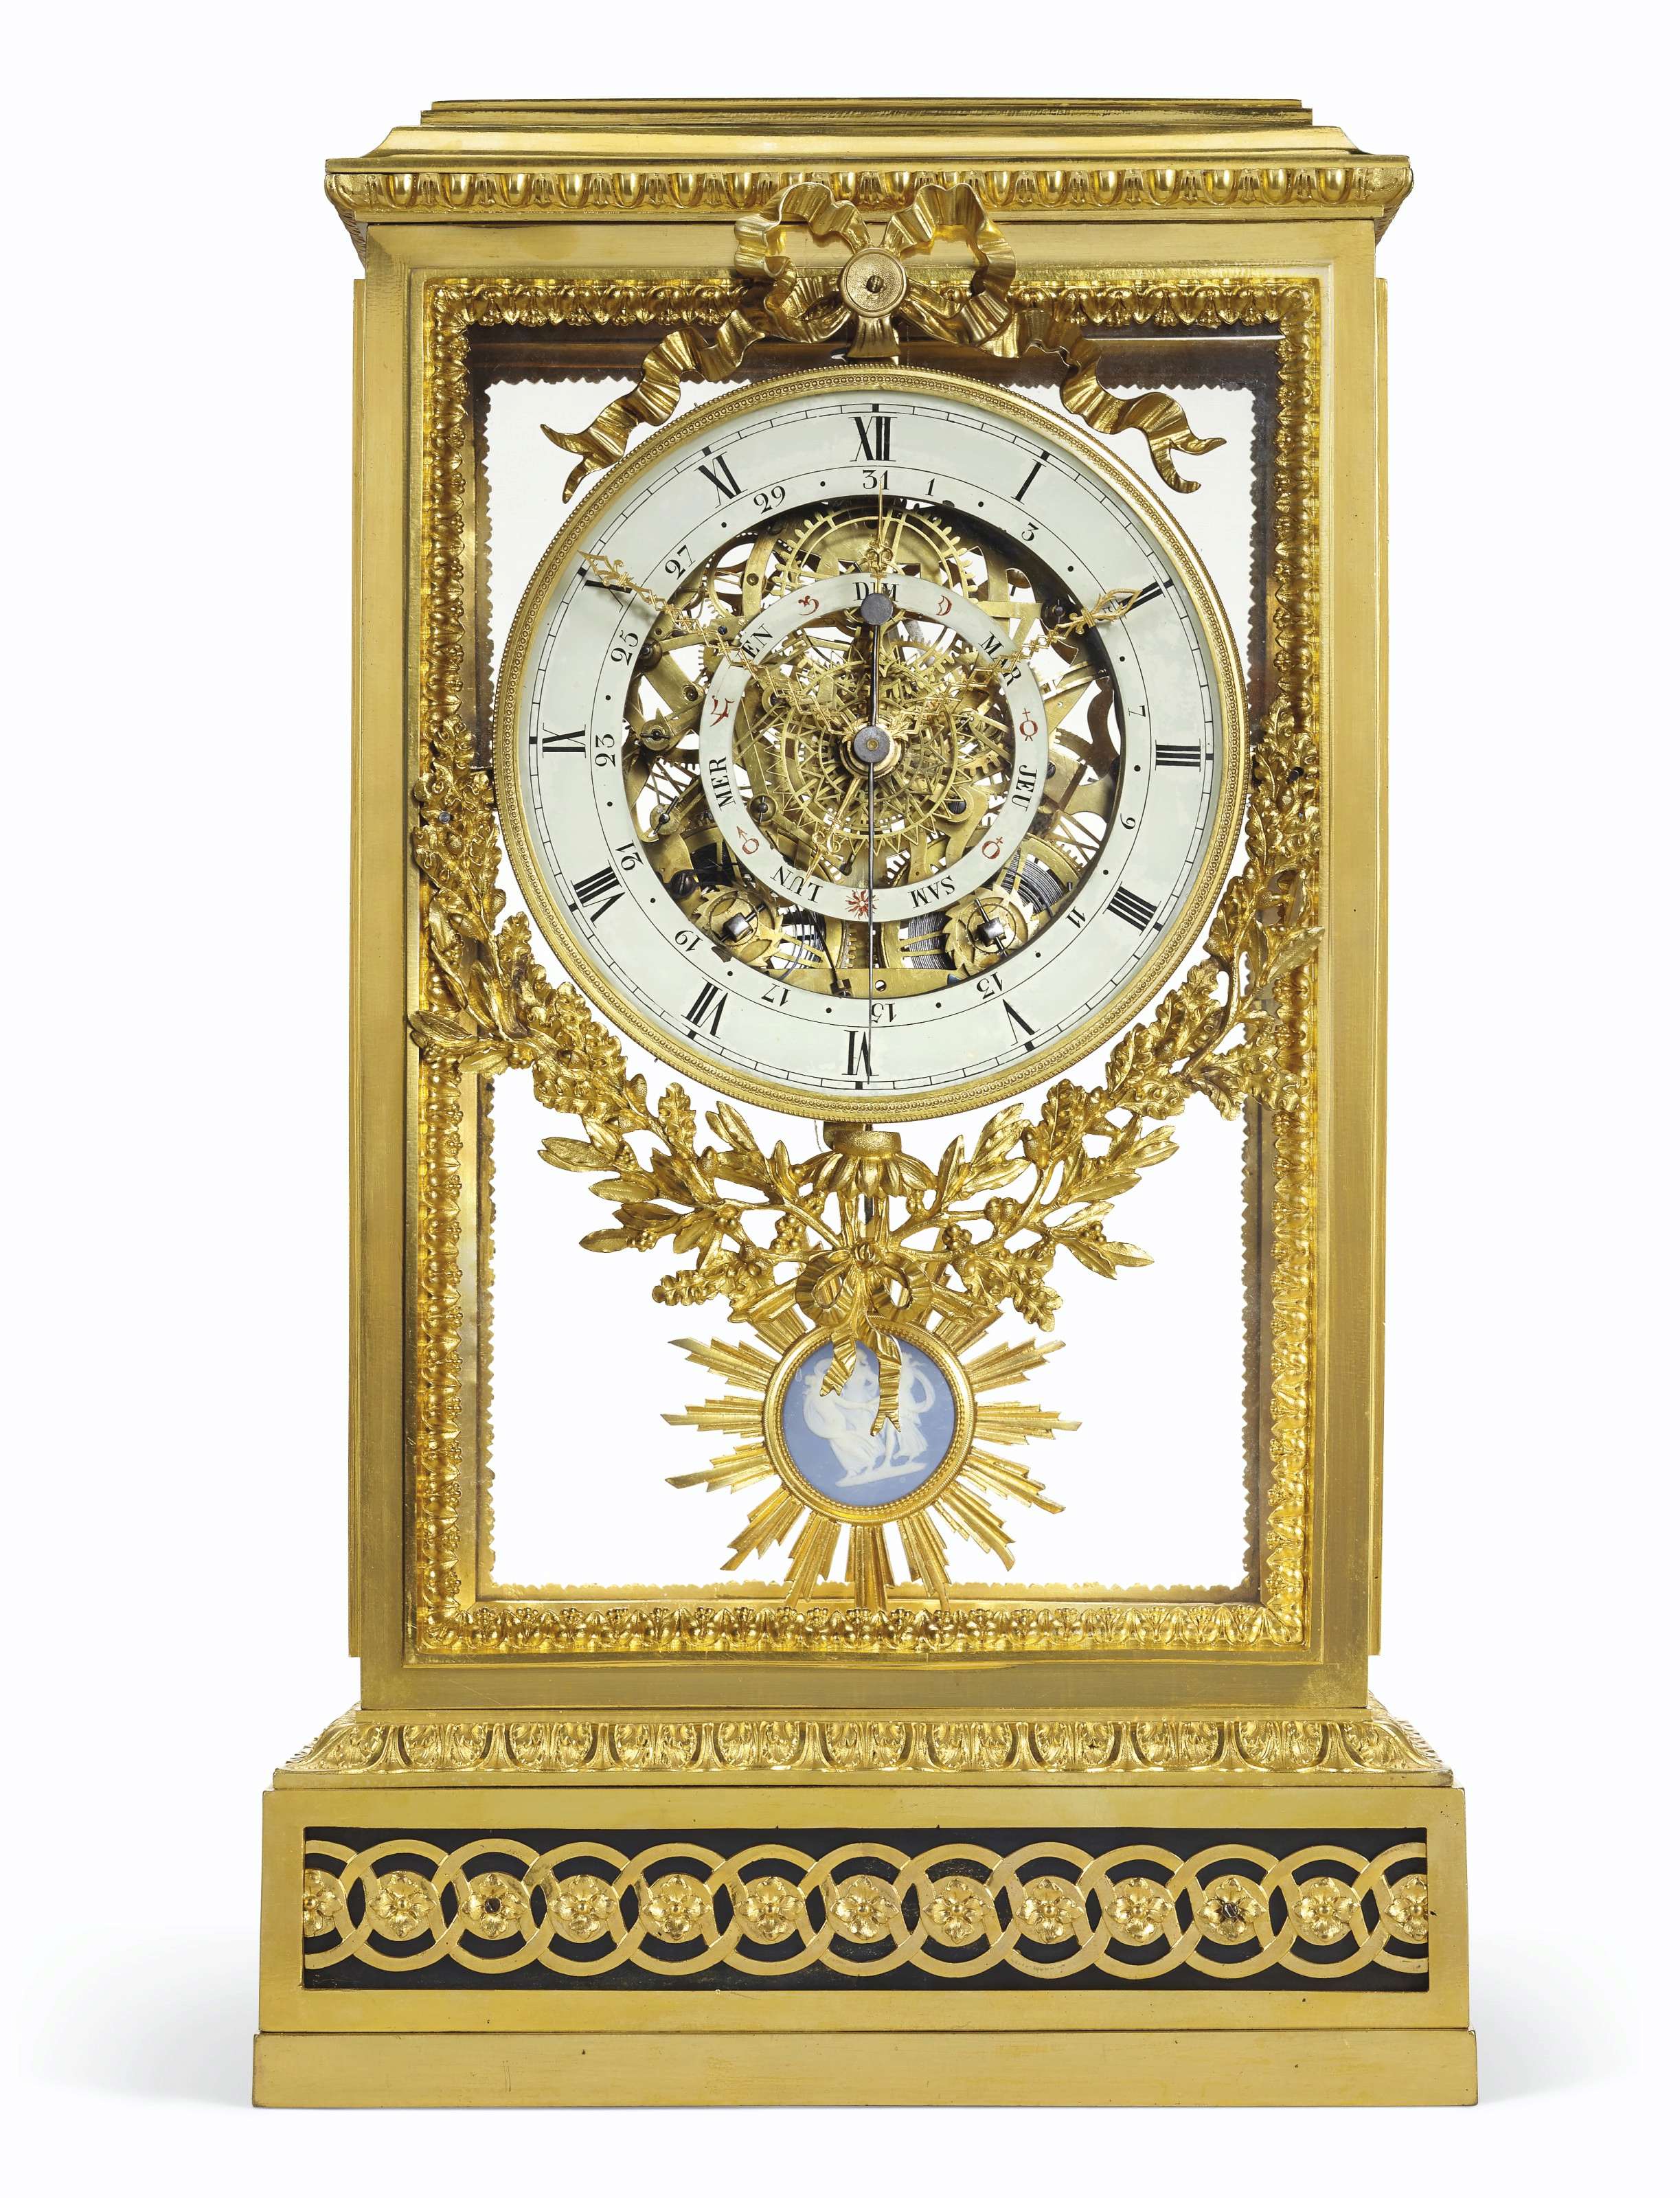 Horloges et pendules du XVIIIe siècle - Page 2 2020_n45